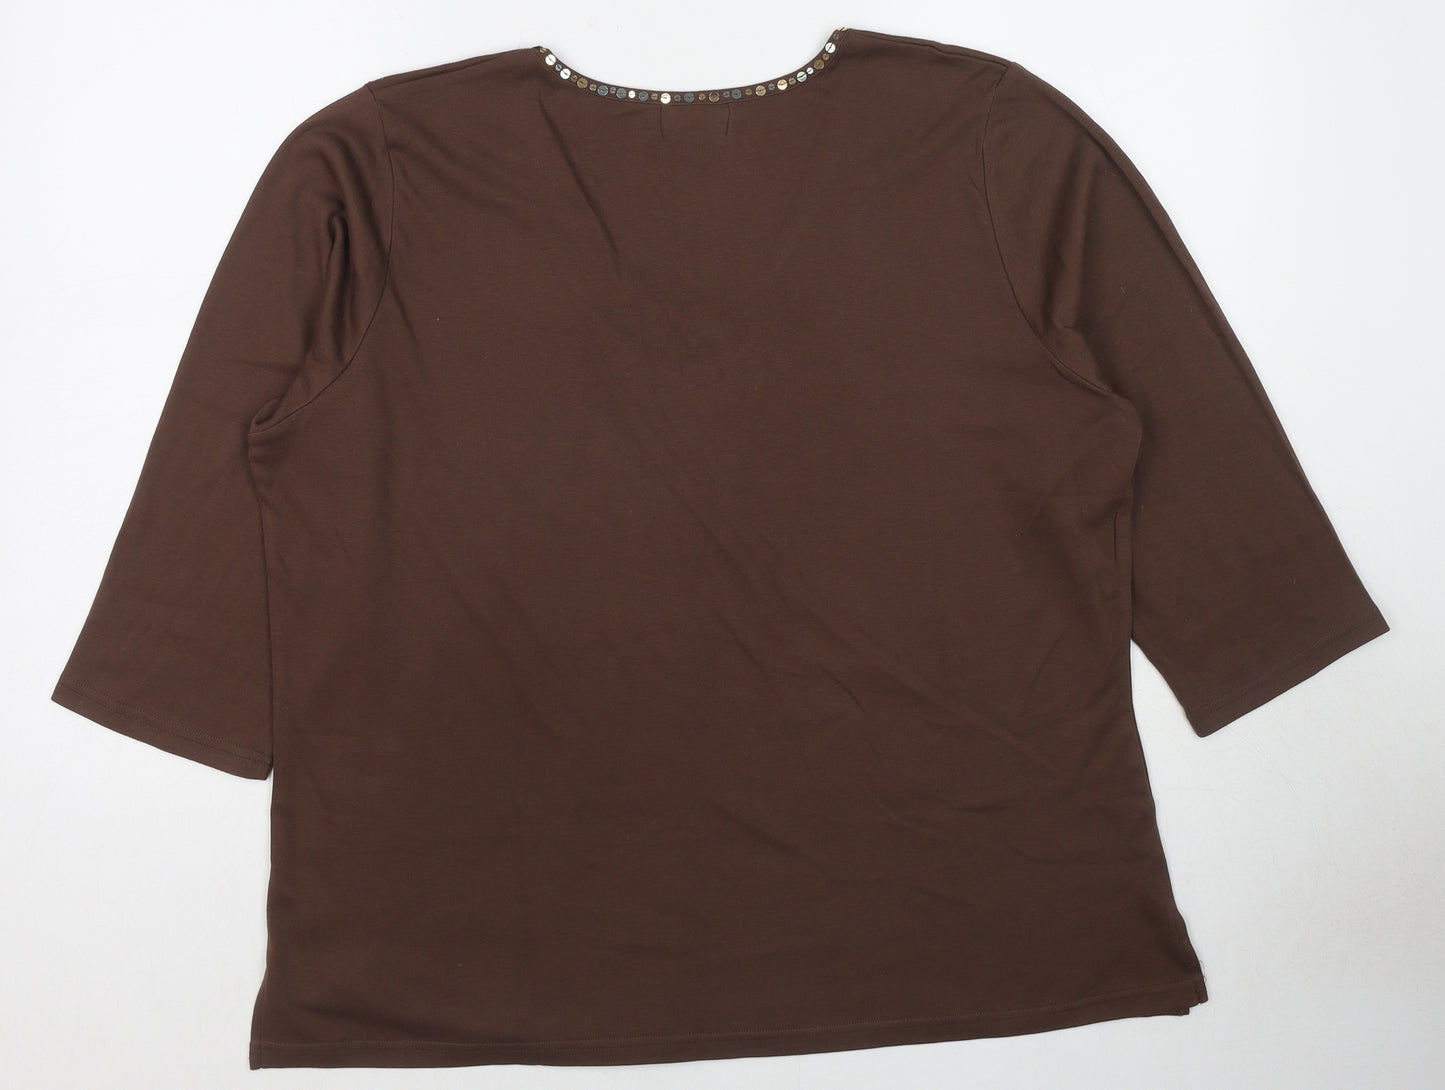 Indigo Moon Womens Brown Cotton Basic T-Shirt Size XL V-Neck - Sequin